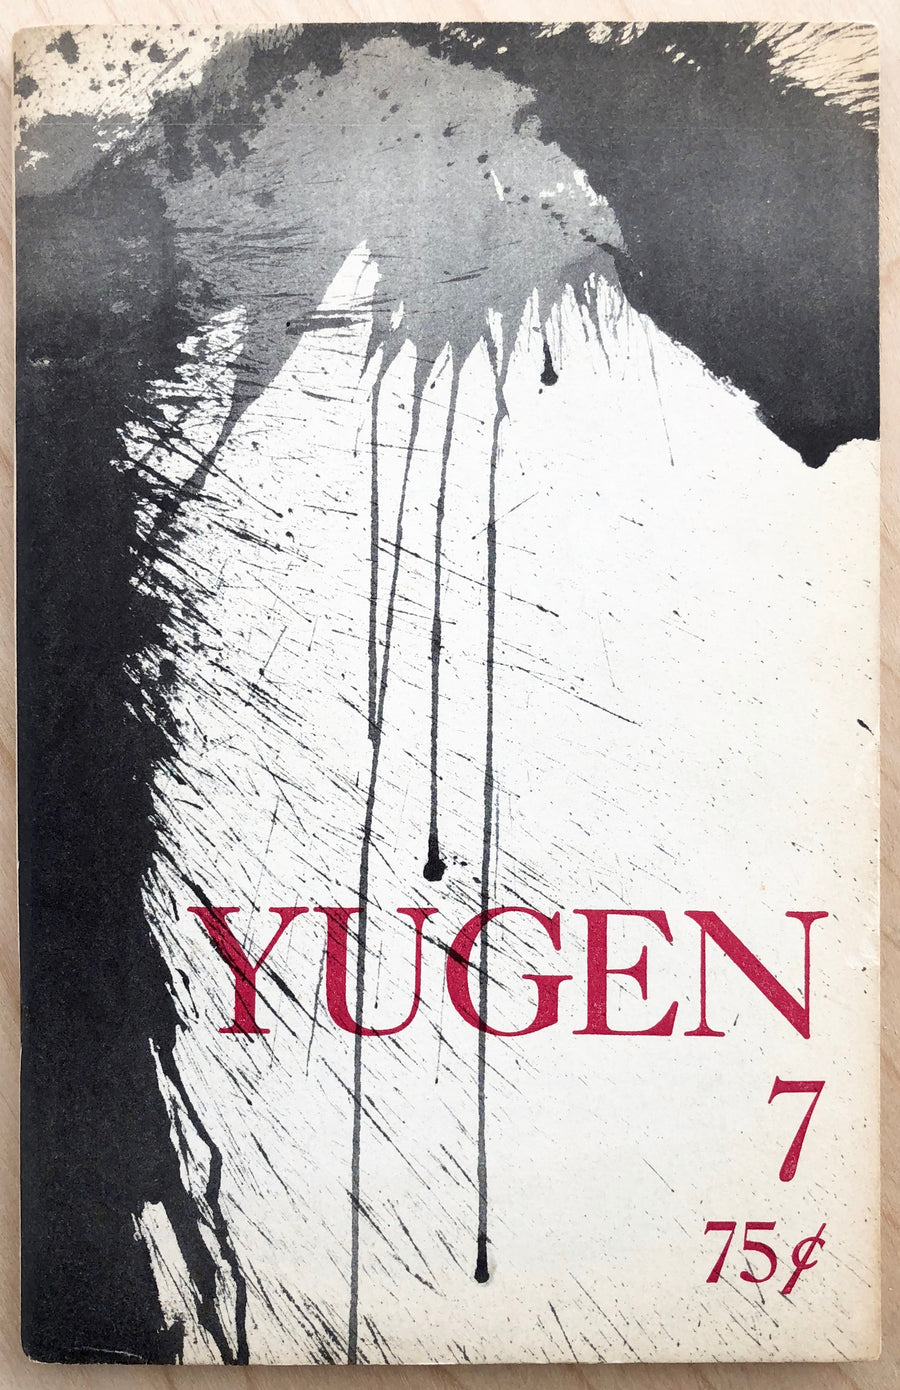 YUGEN 7 edited by LeRoi Jones